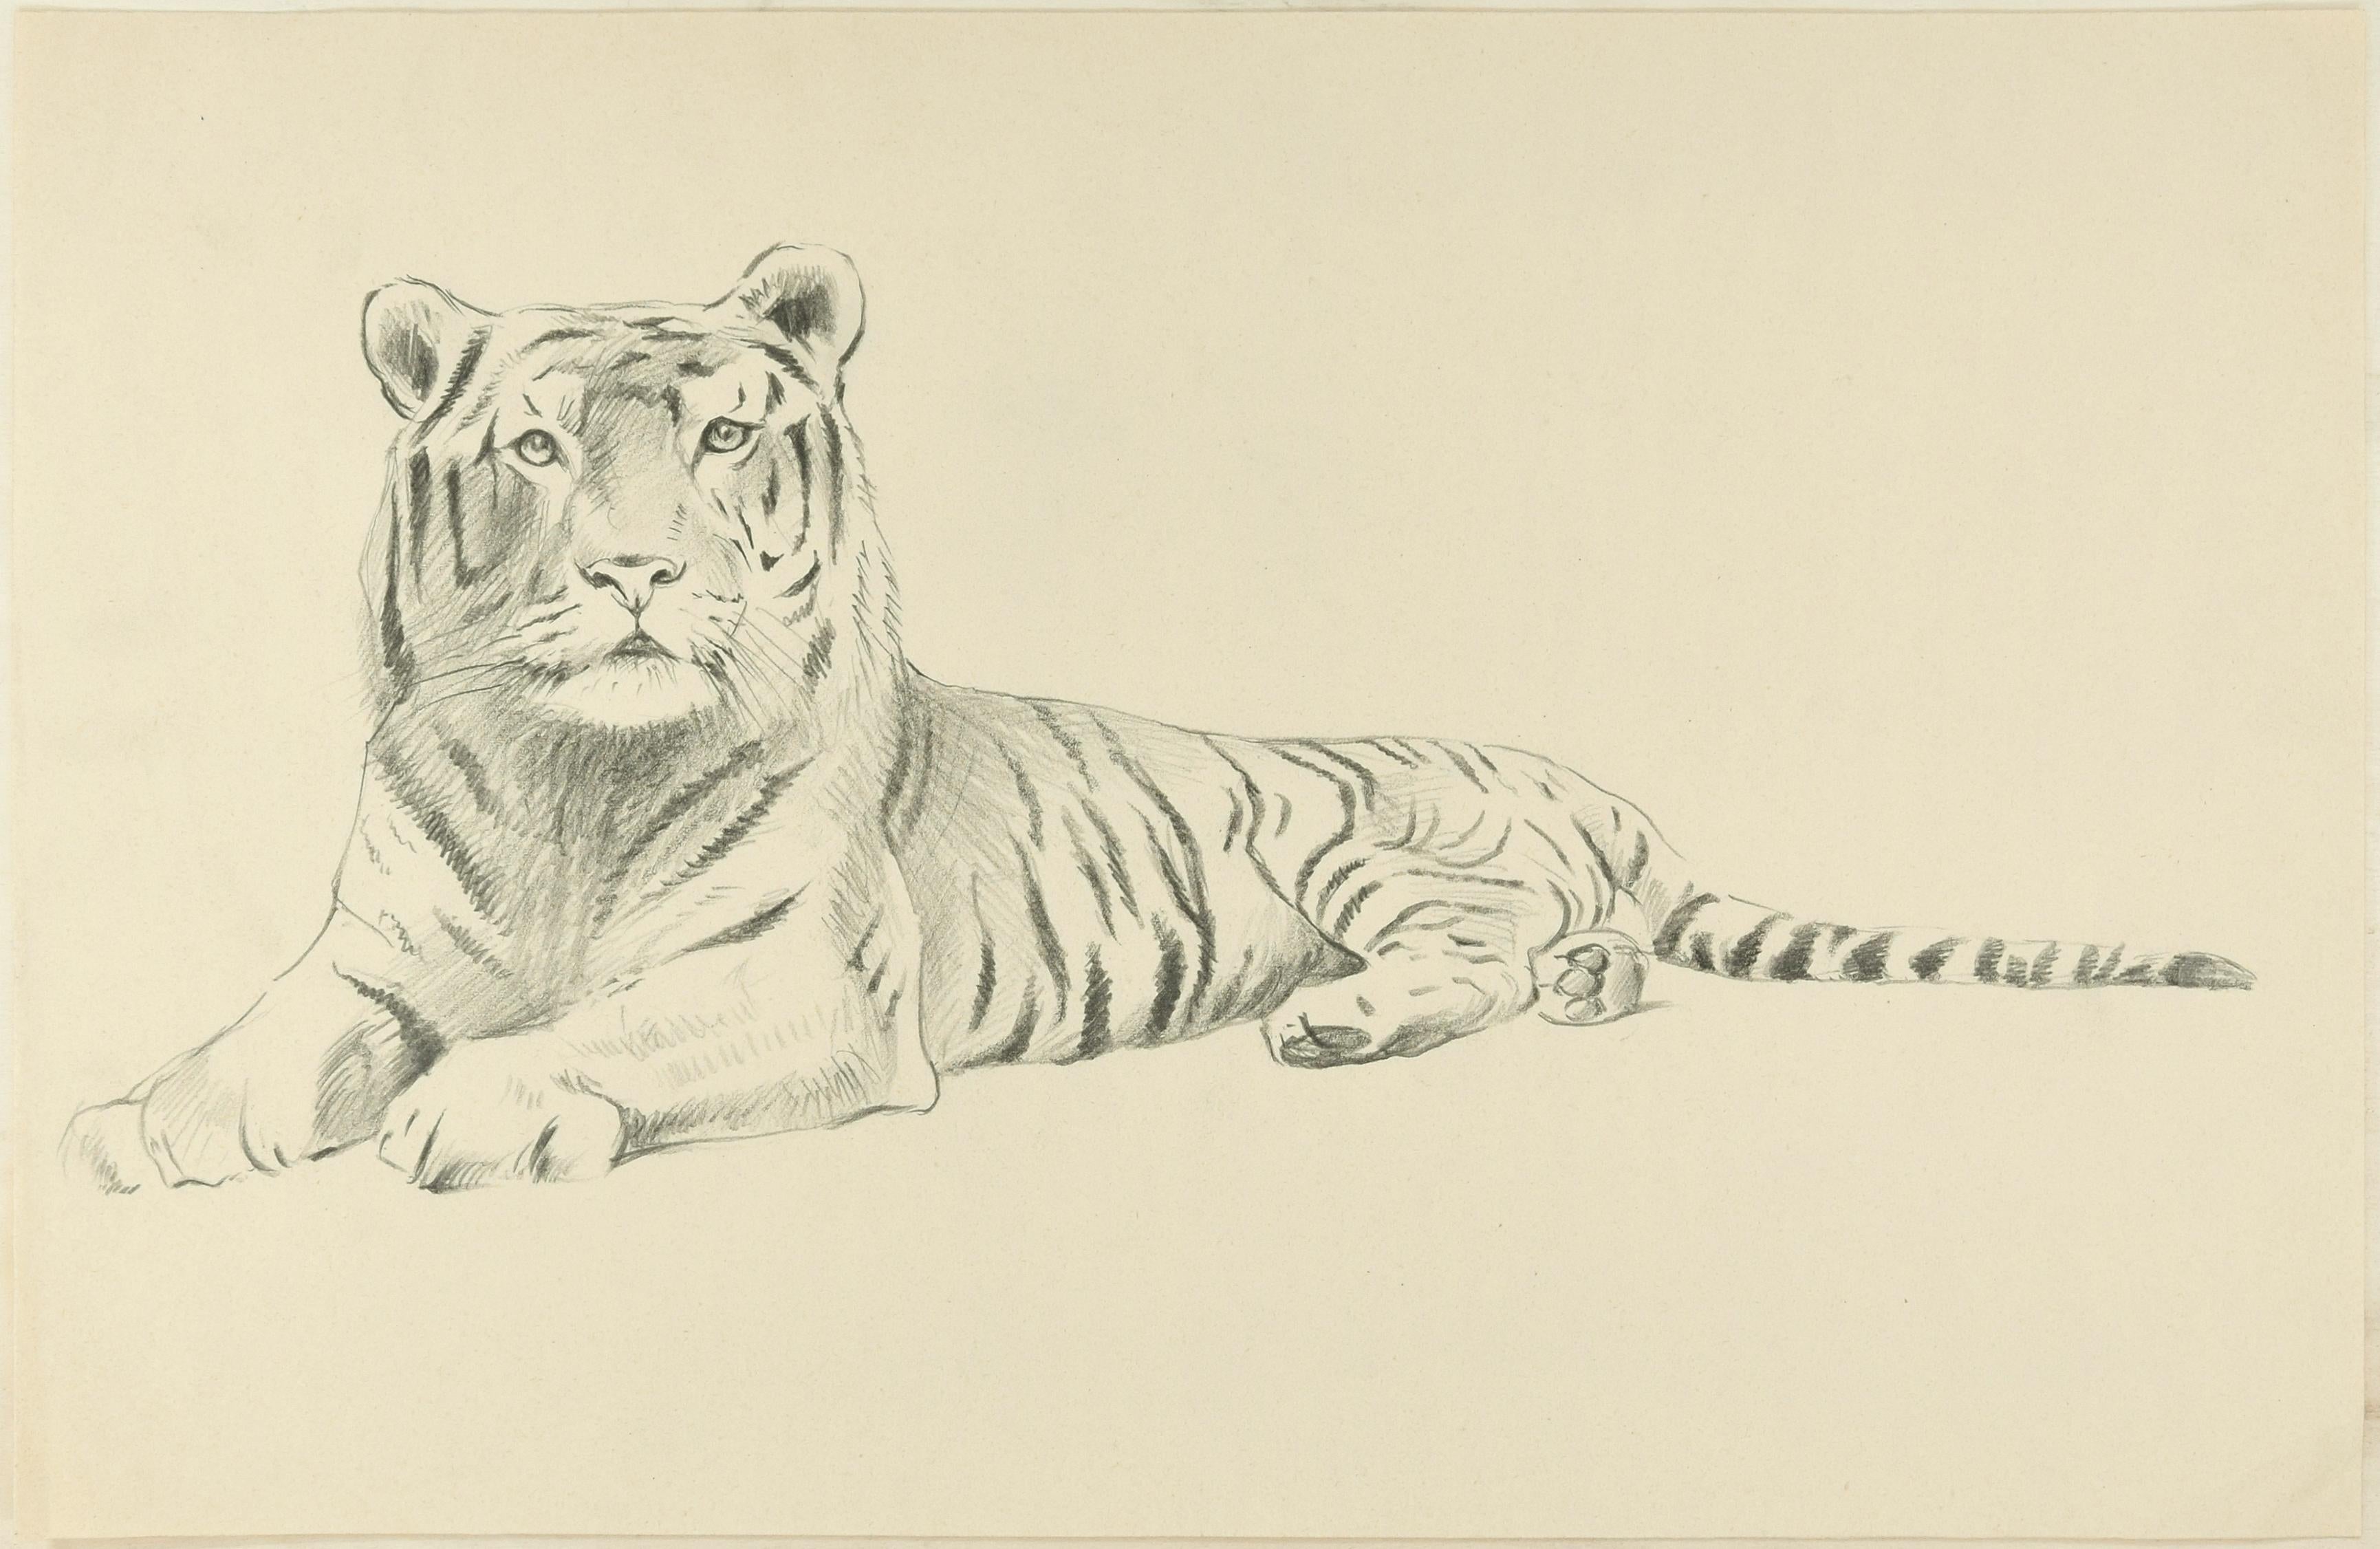 Wilhelm Lorenz Figurative Art - Sketch of a Tiger - Original Pencil Drawing by Willy Lorenz - 1950s